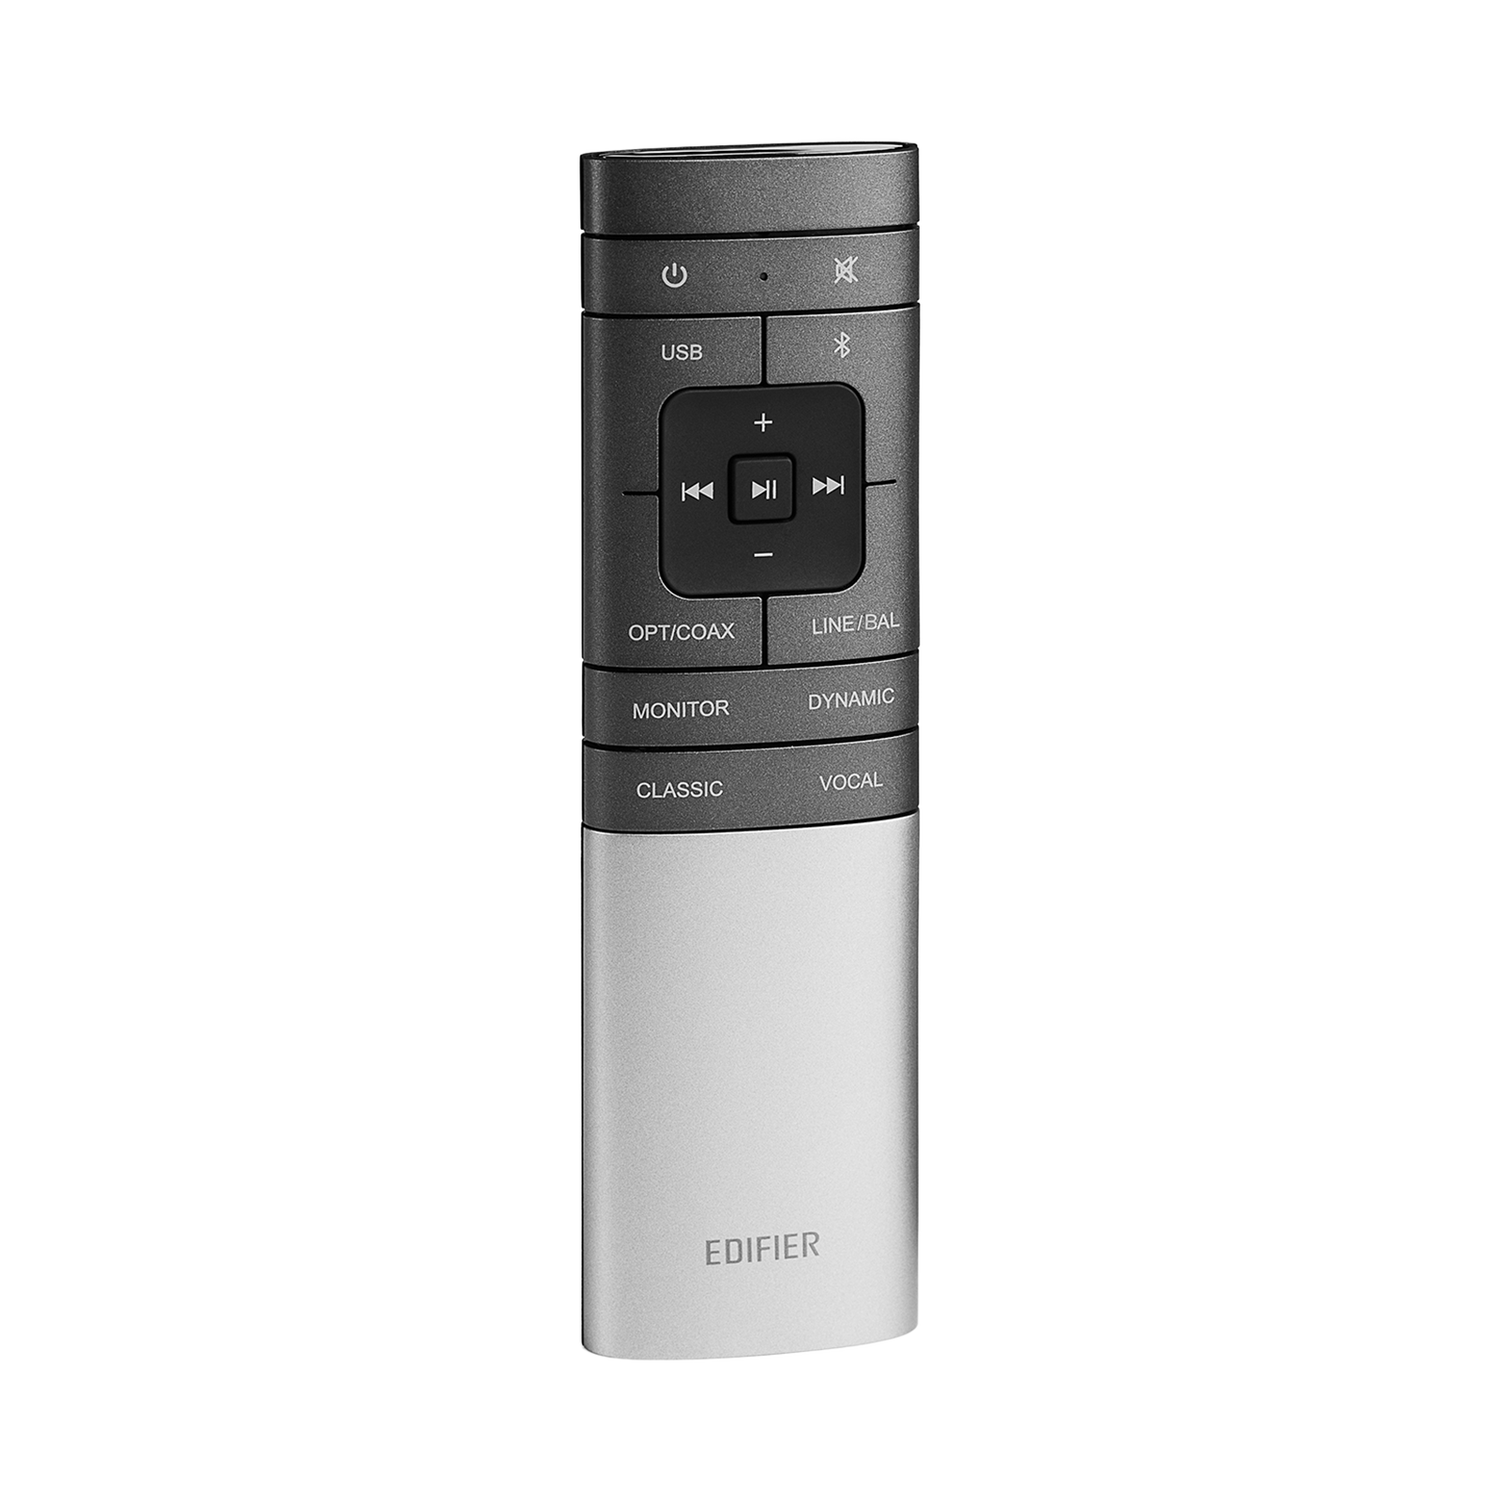 Remote RCA10B-S3000Pro Take full advantage of the S3000Pro wireless bookshelf speakers